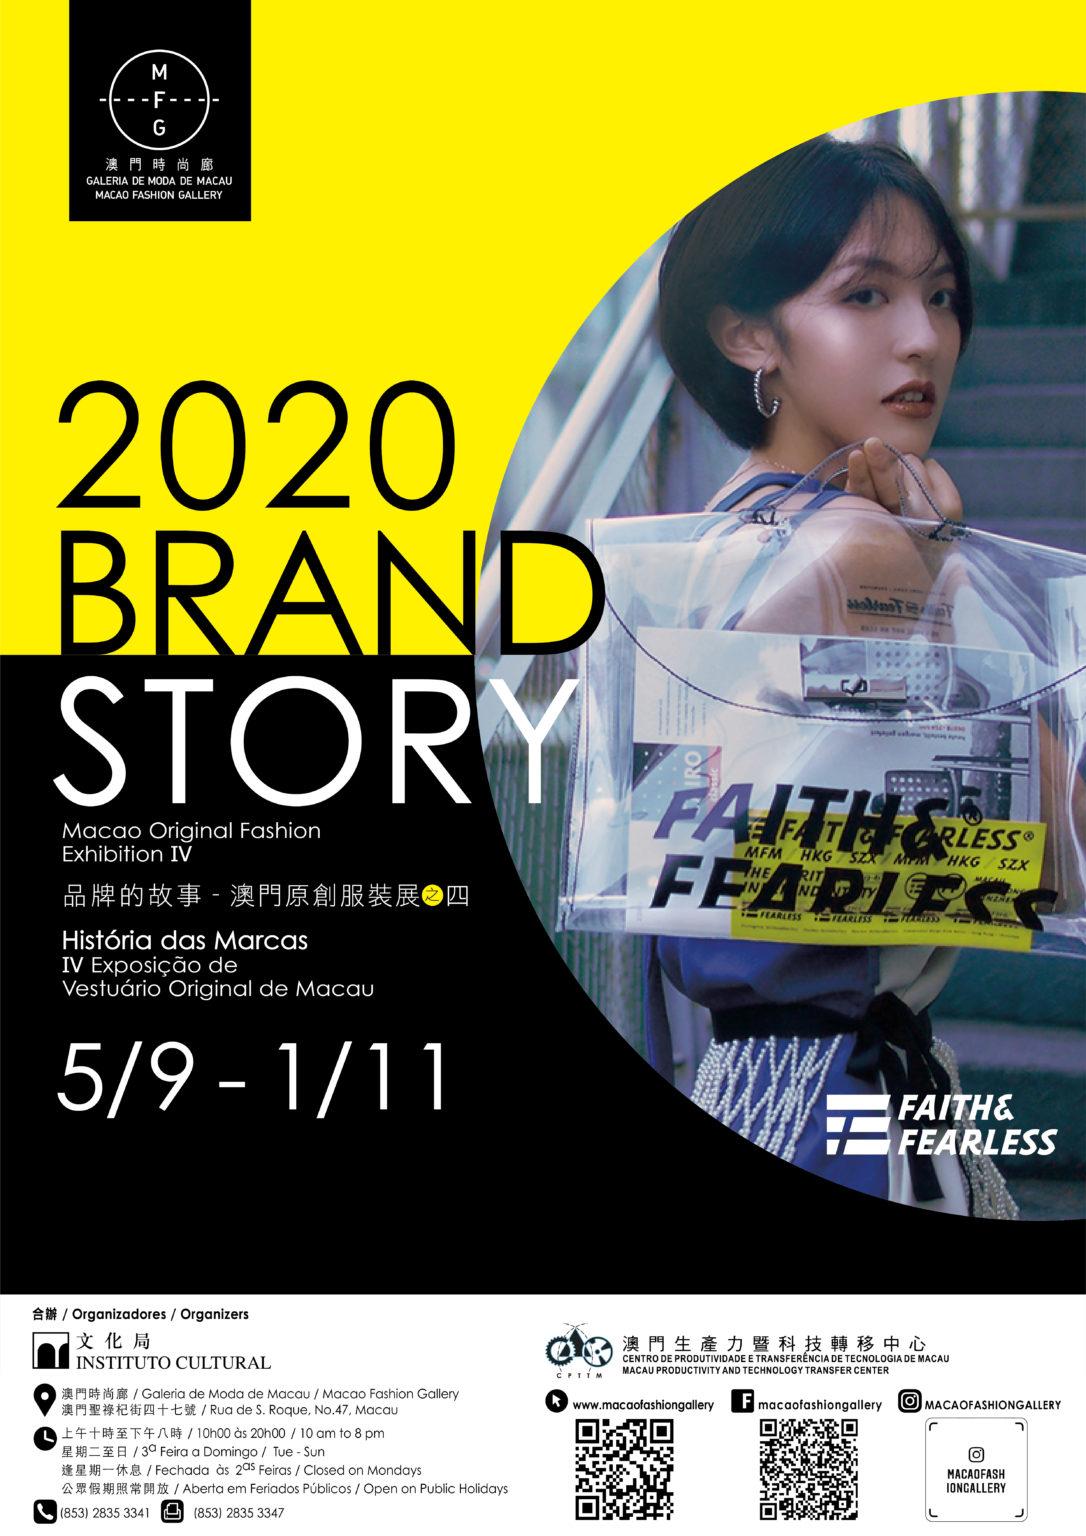 The 2020 Brand Story—Macao Original Fashion Exhibition IV